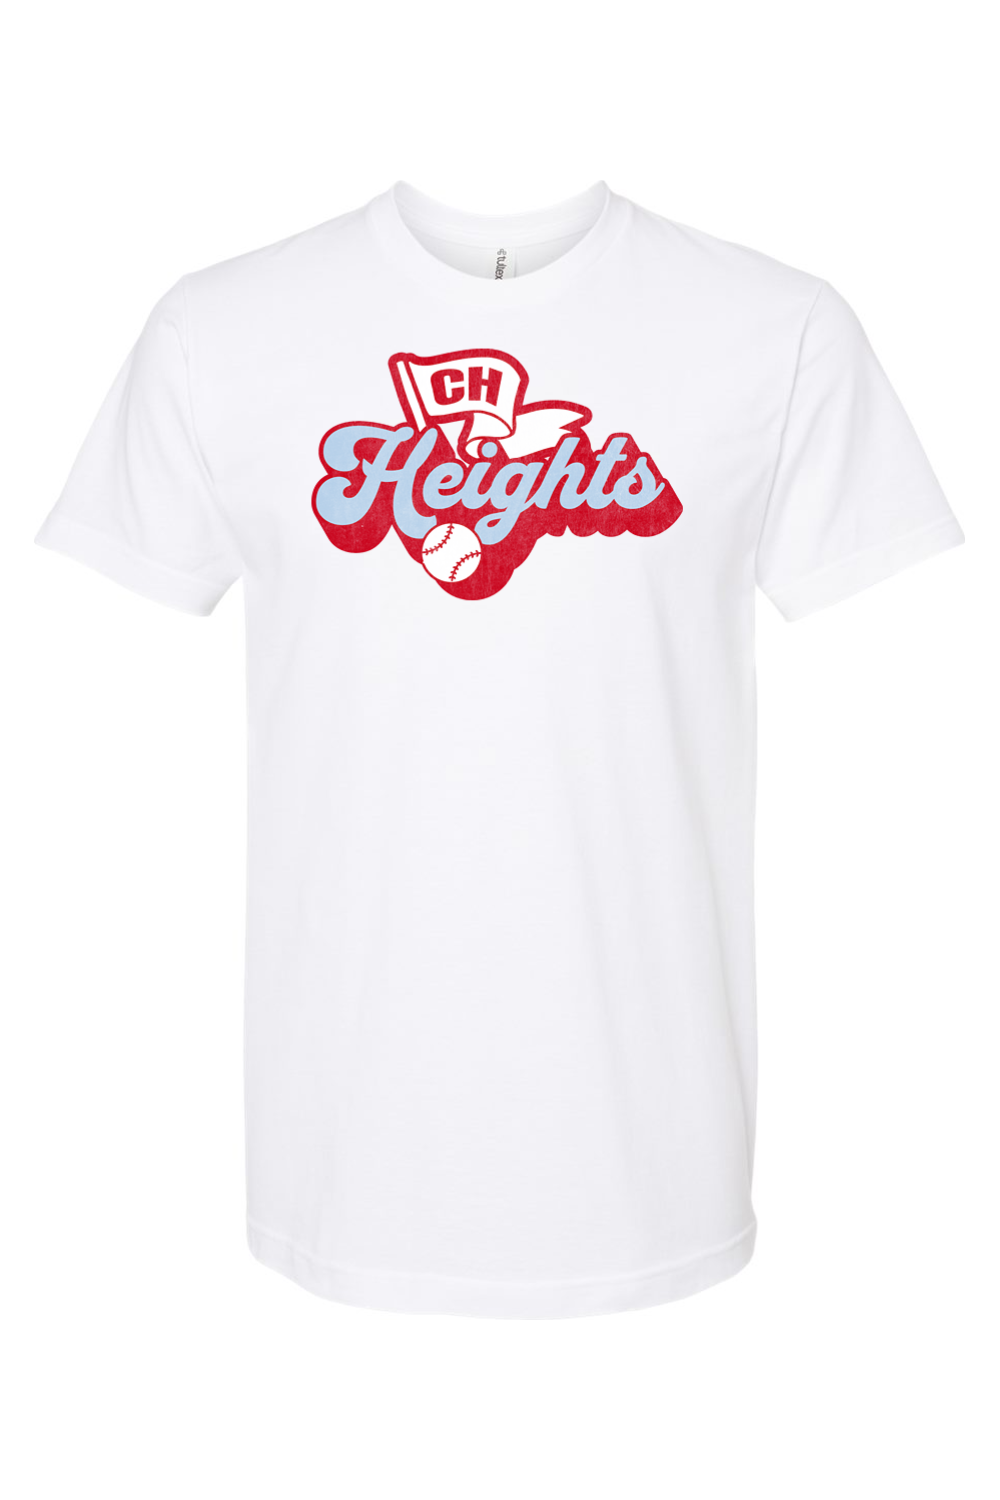 Heights Baseball - Pennant T-Shirt - Yinzylvania